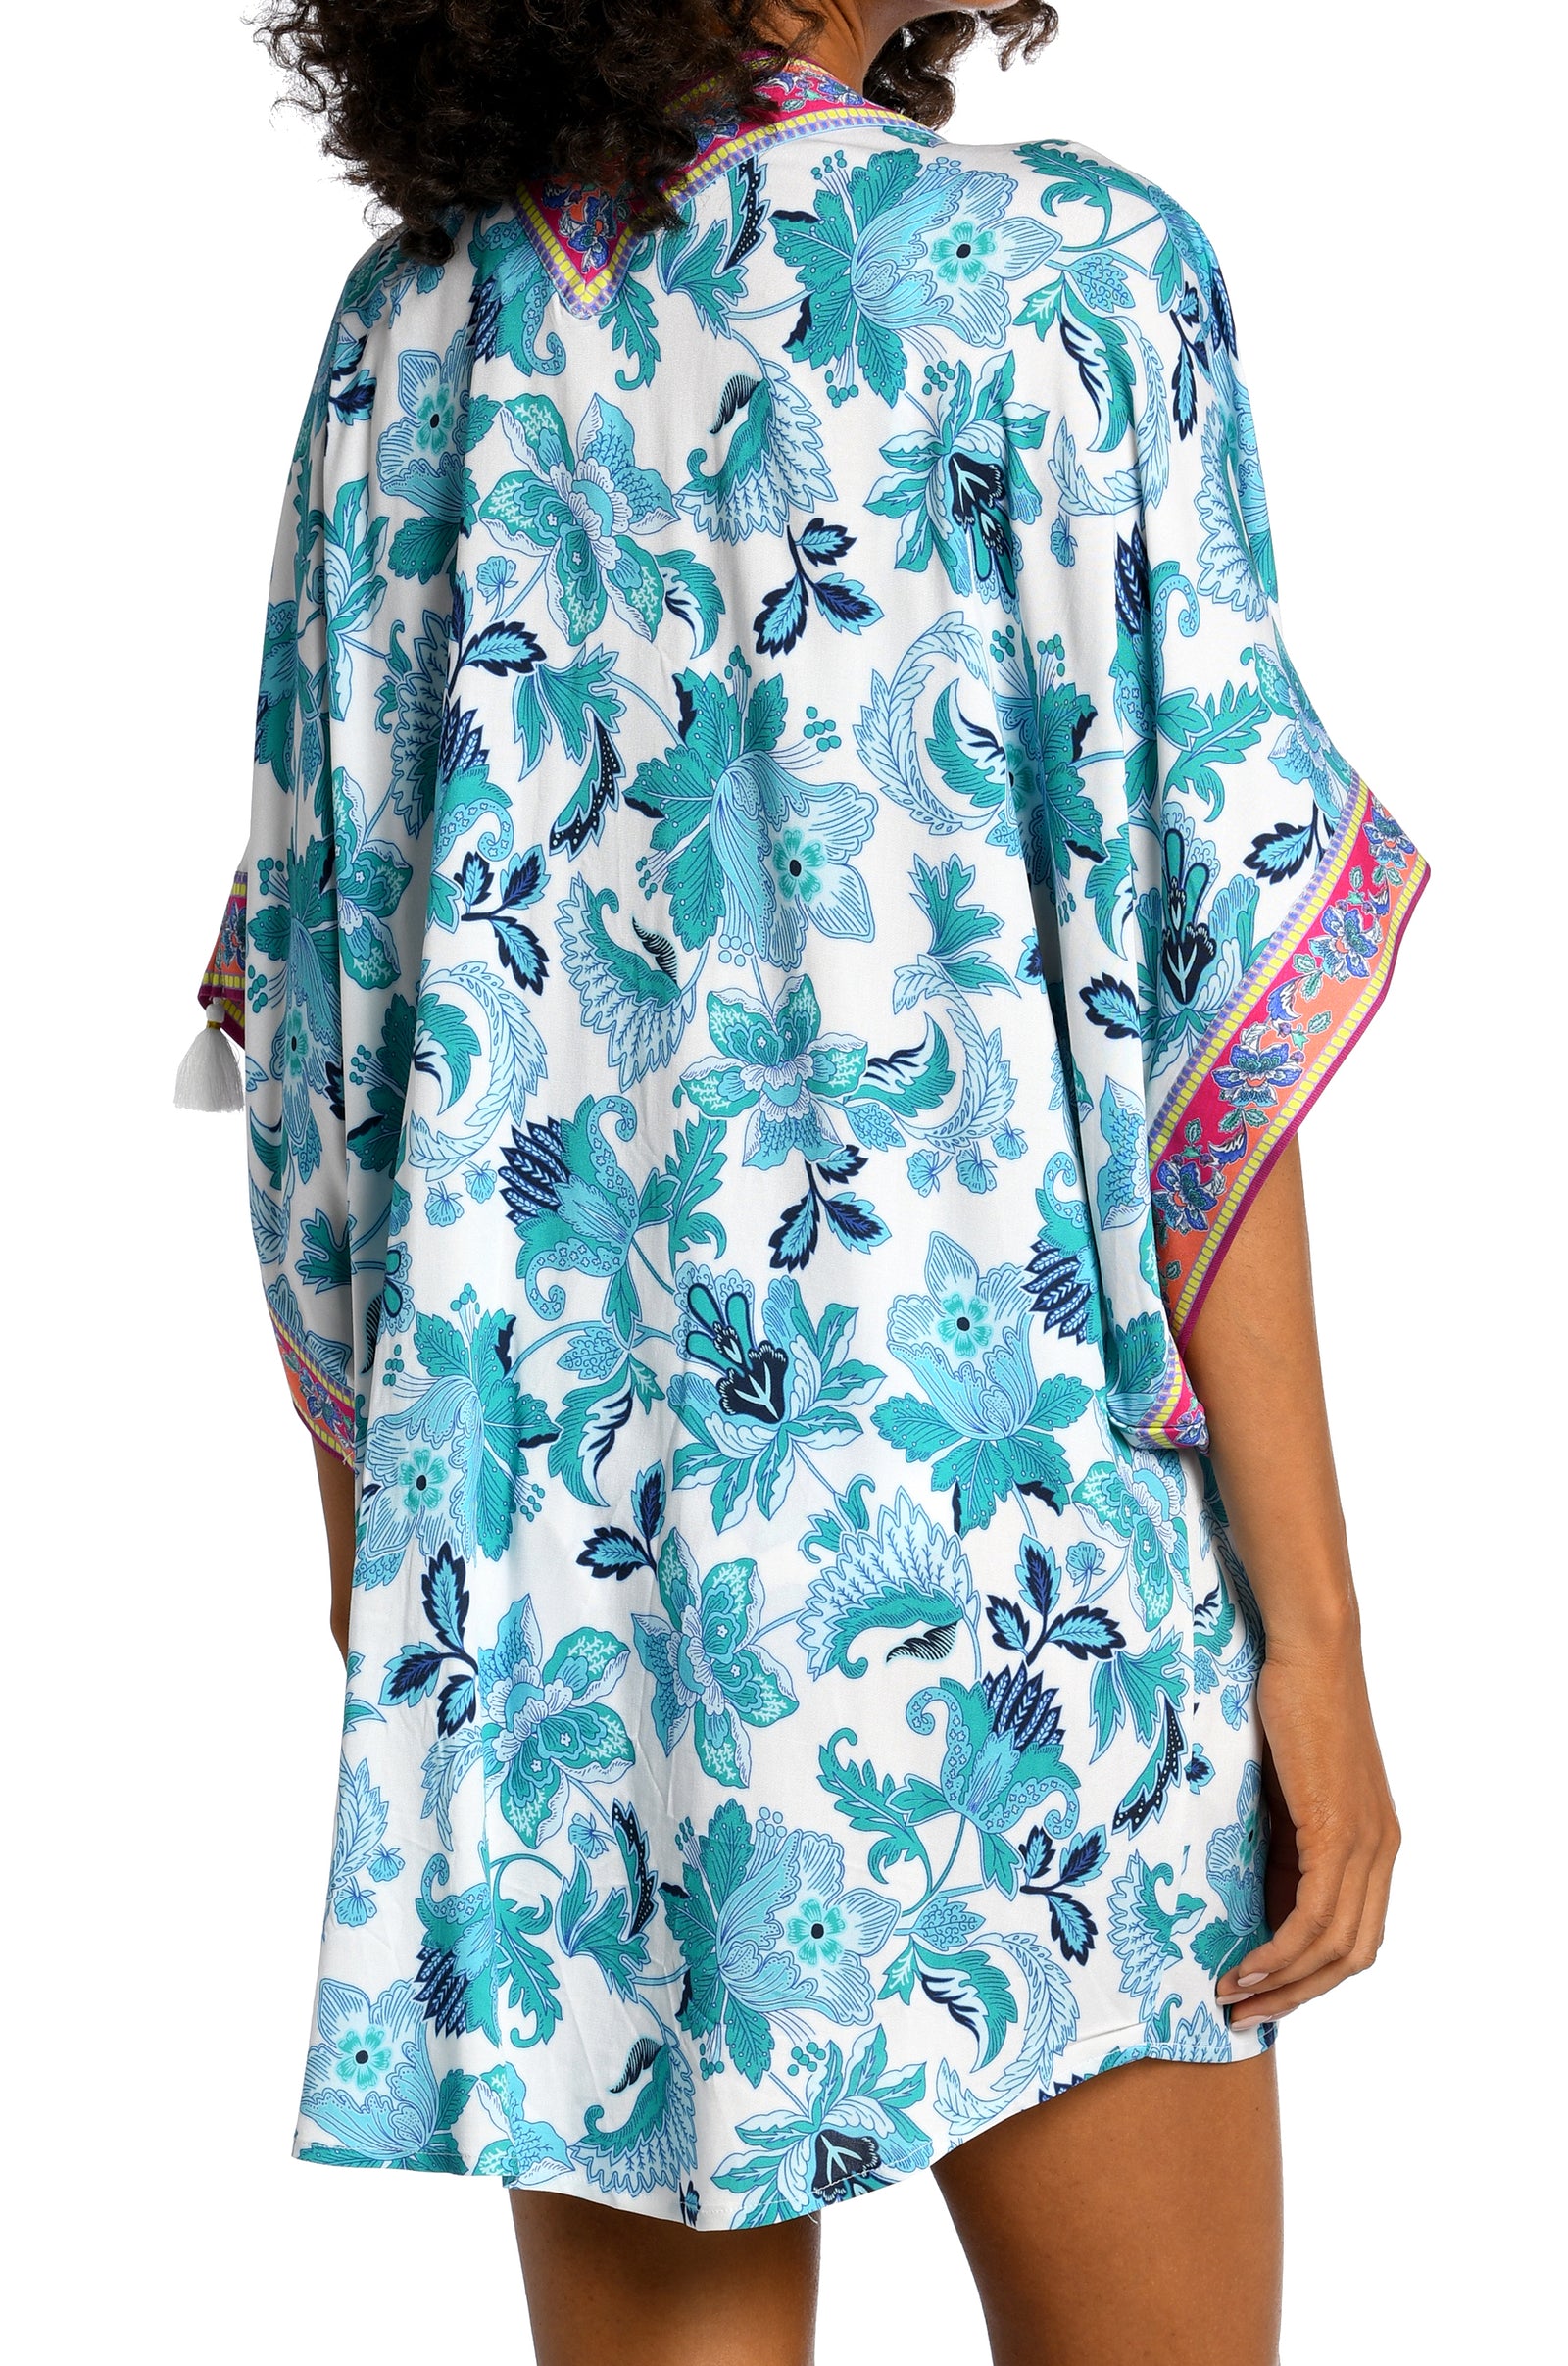 Santorini Sun Collection  Open Front Kimono   One Size  Fabric Content: 100% Rayon Challis  Product#: LB3VF63